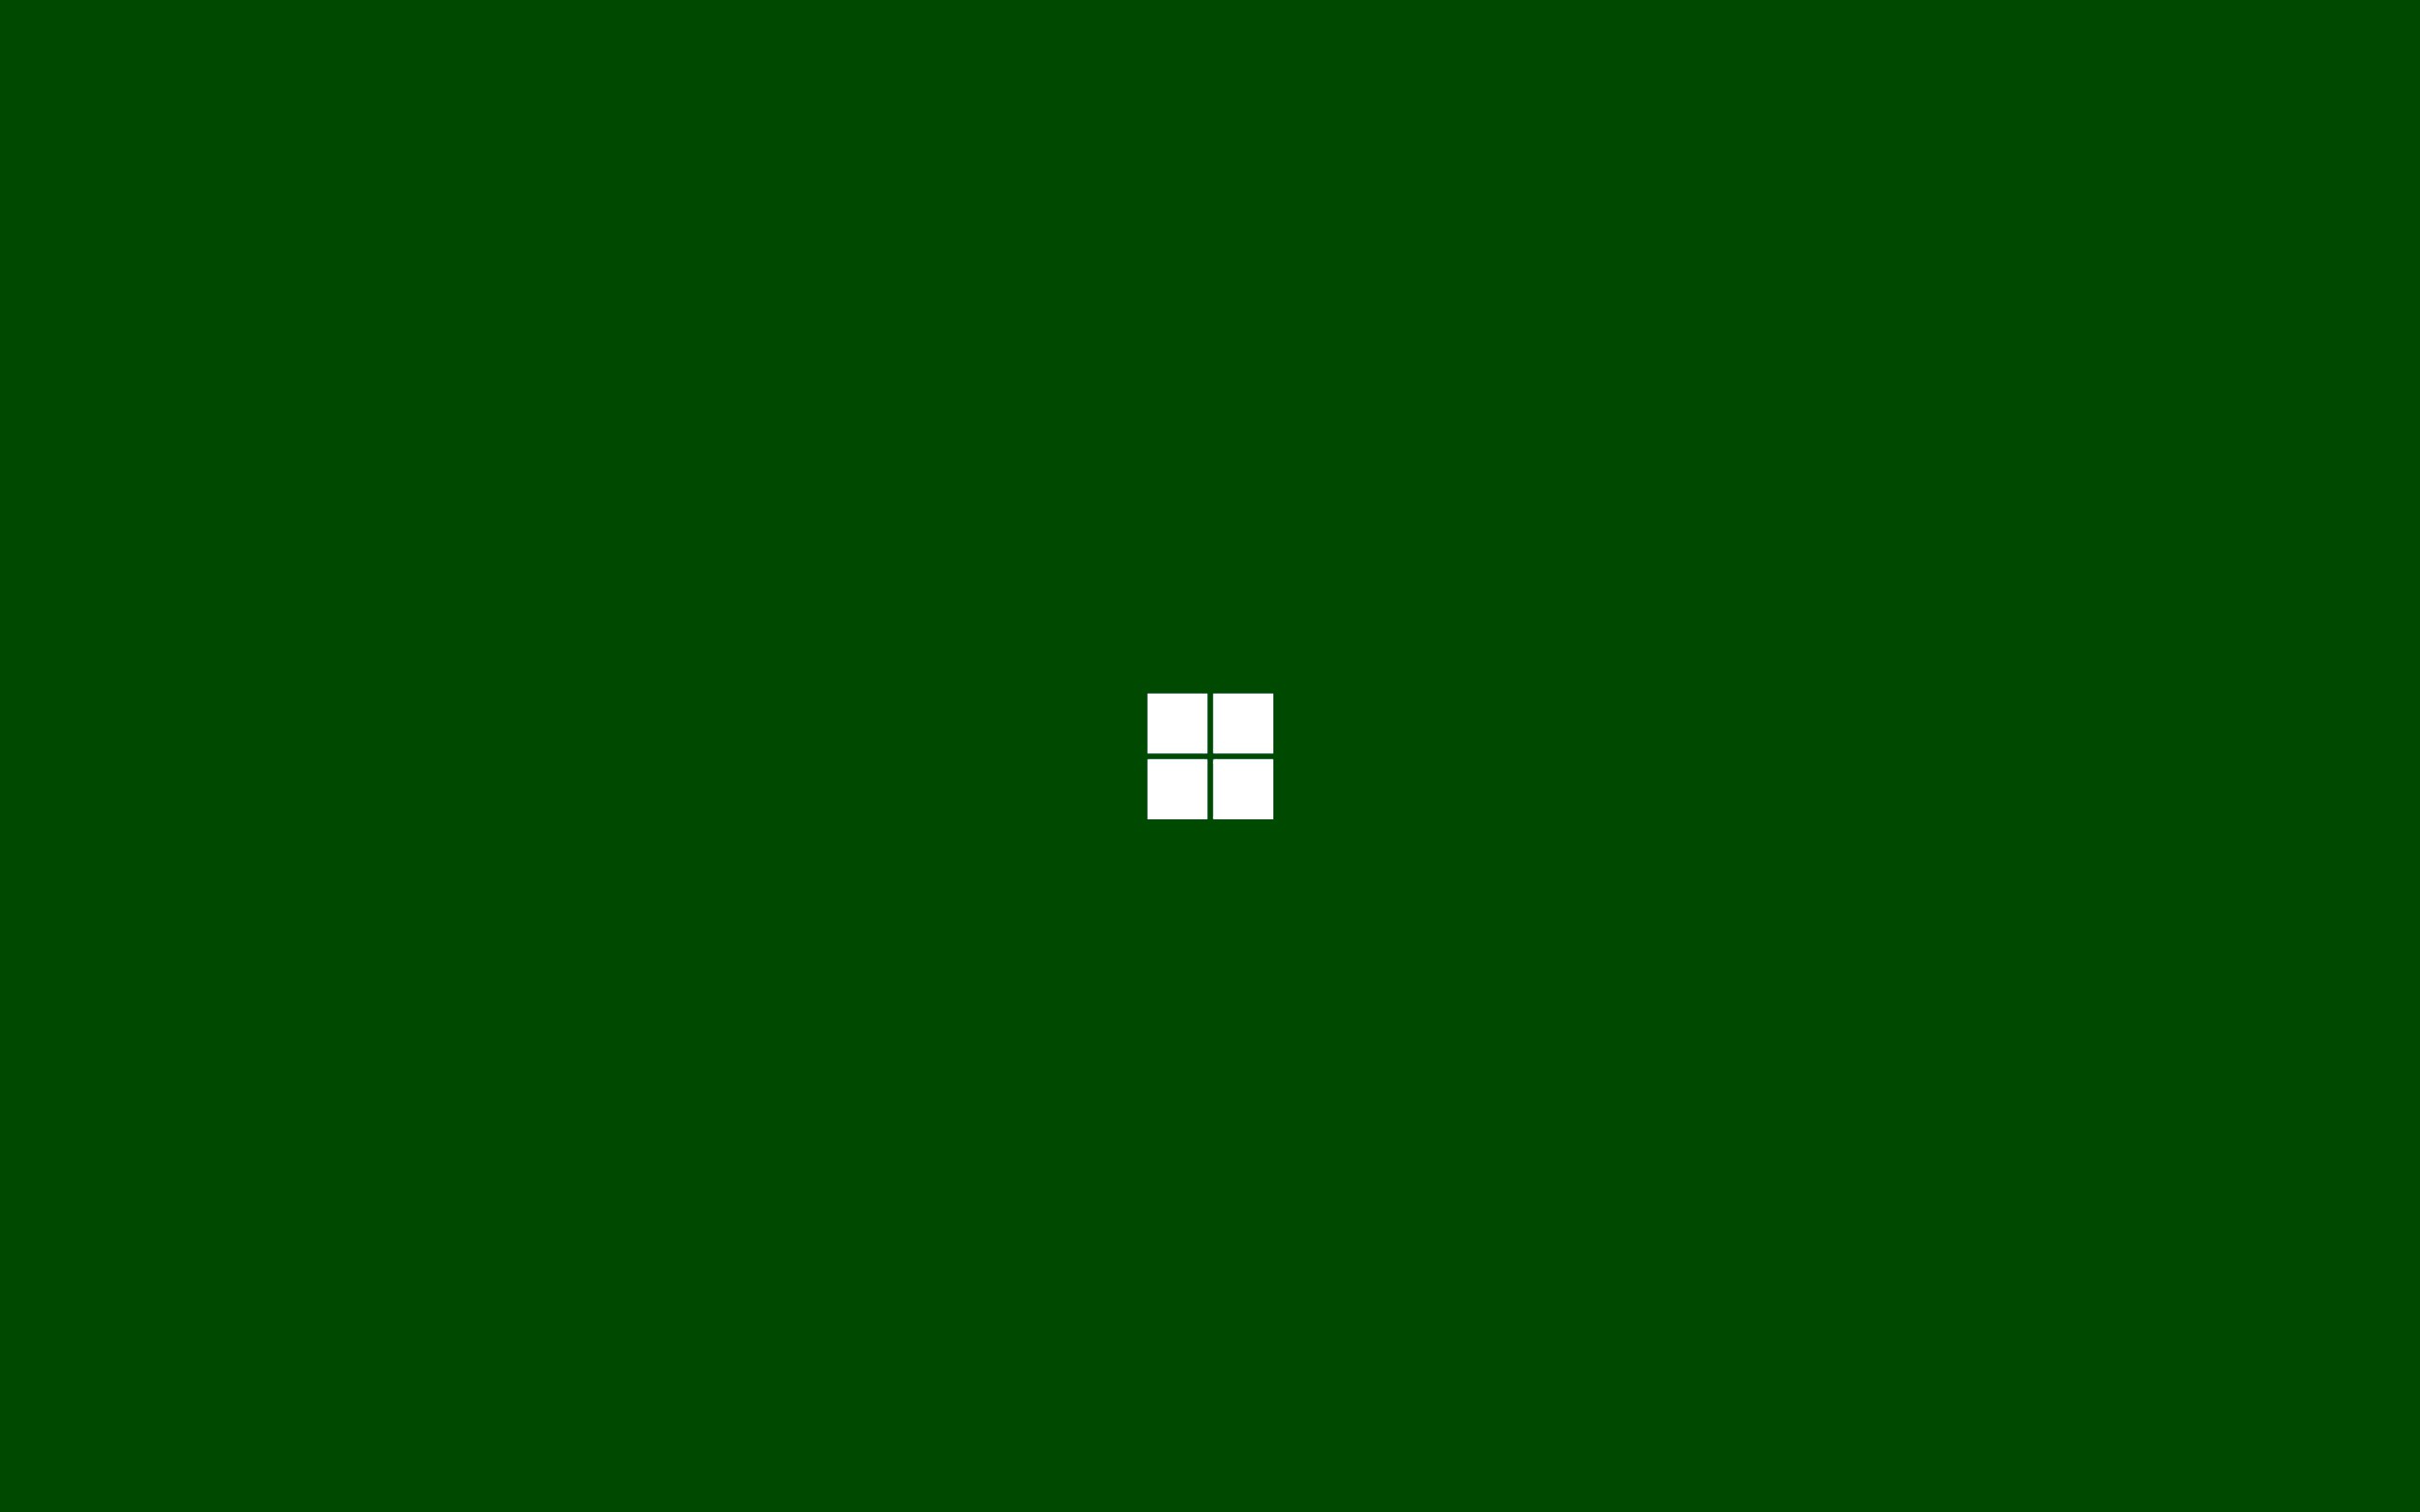 General 2560x1600 Windows 10 Microsoft Windows operating system minimalism logo simple background artwork green background